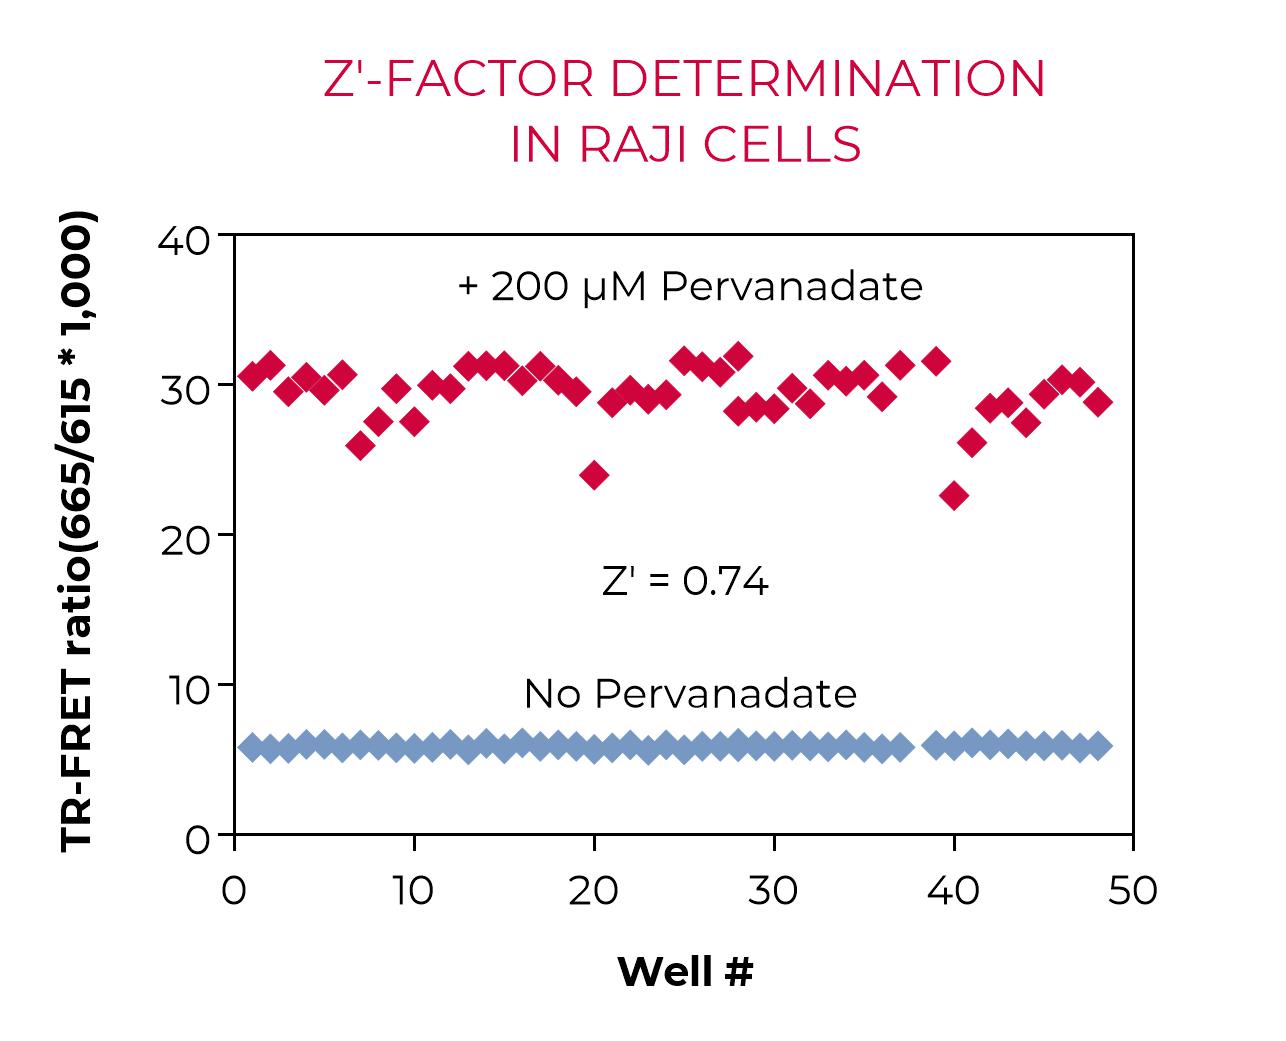 Z'-factor determination in Raji cells